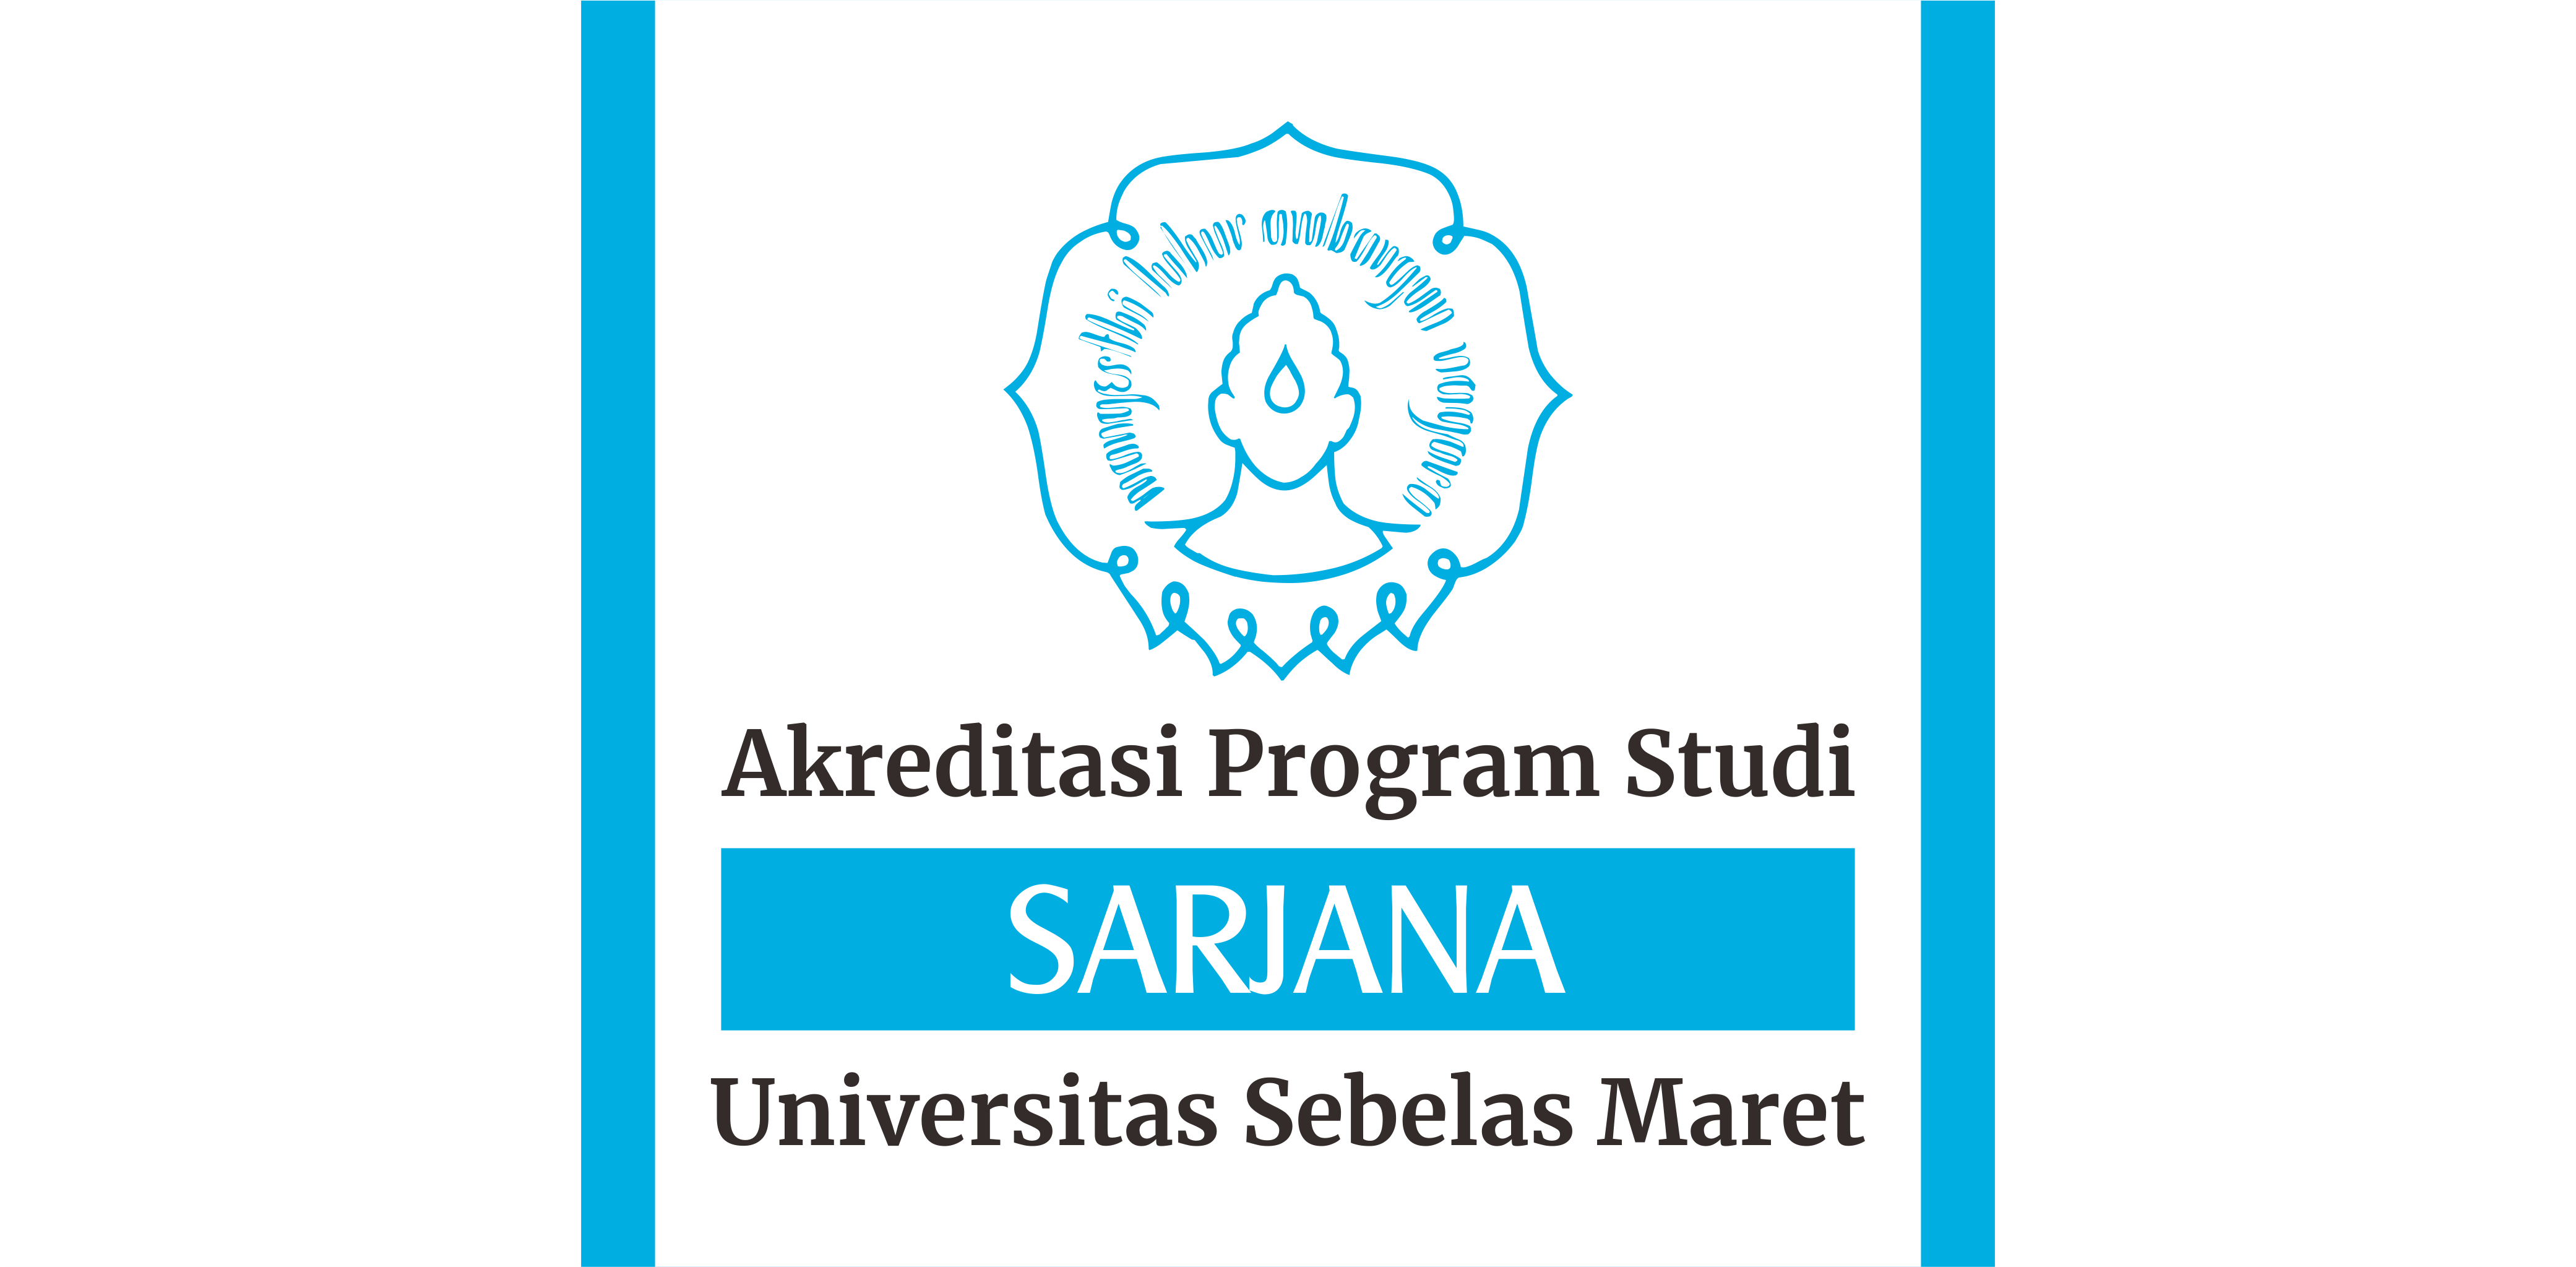 Akreditasi Program Studi di Program Sarjana UNS